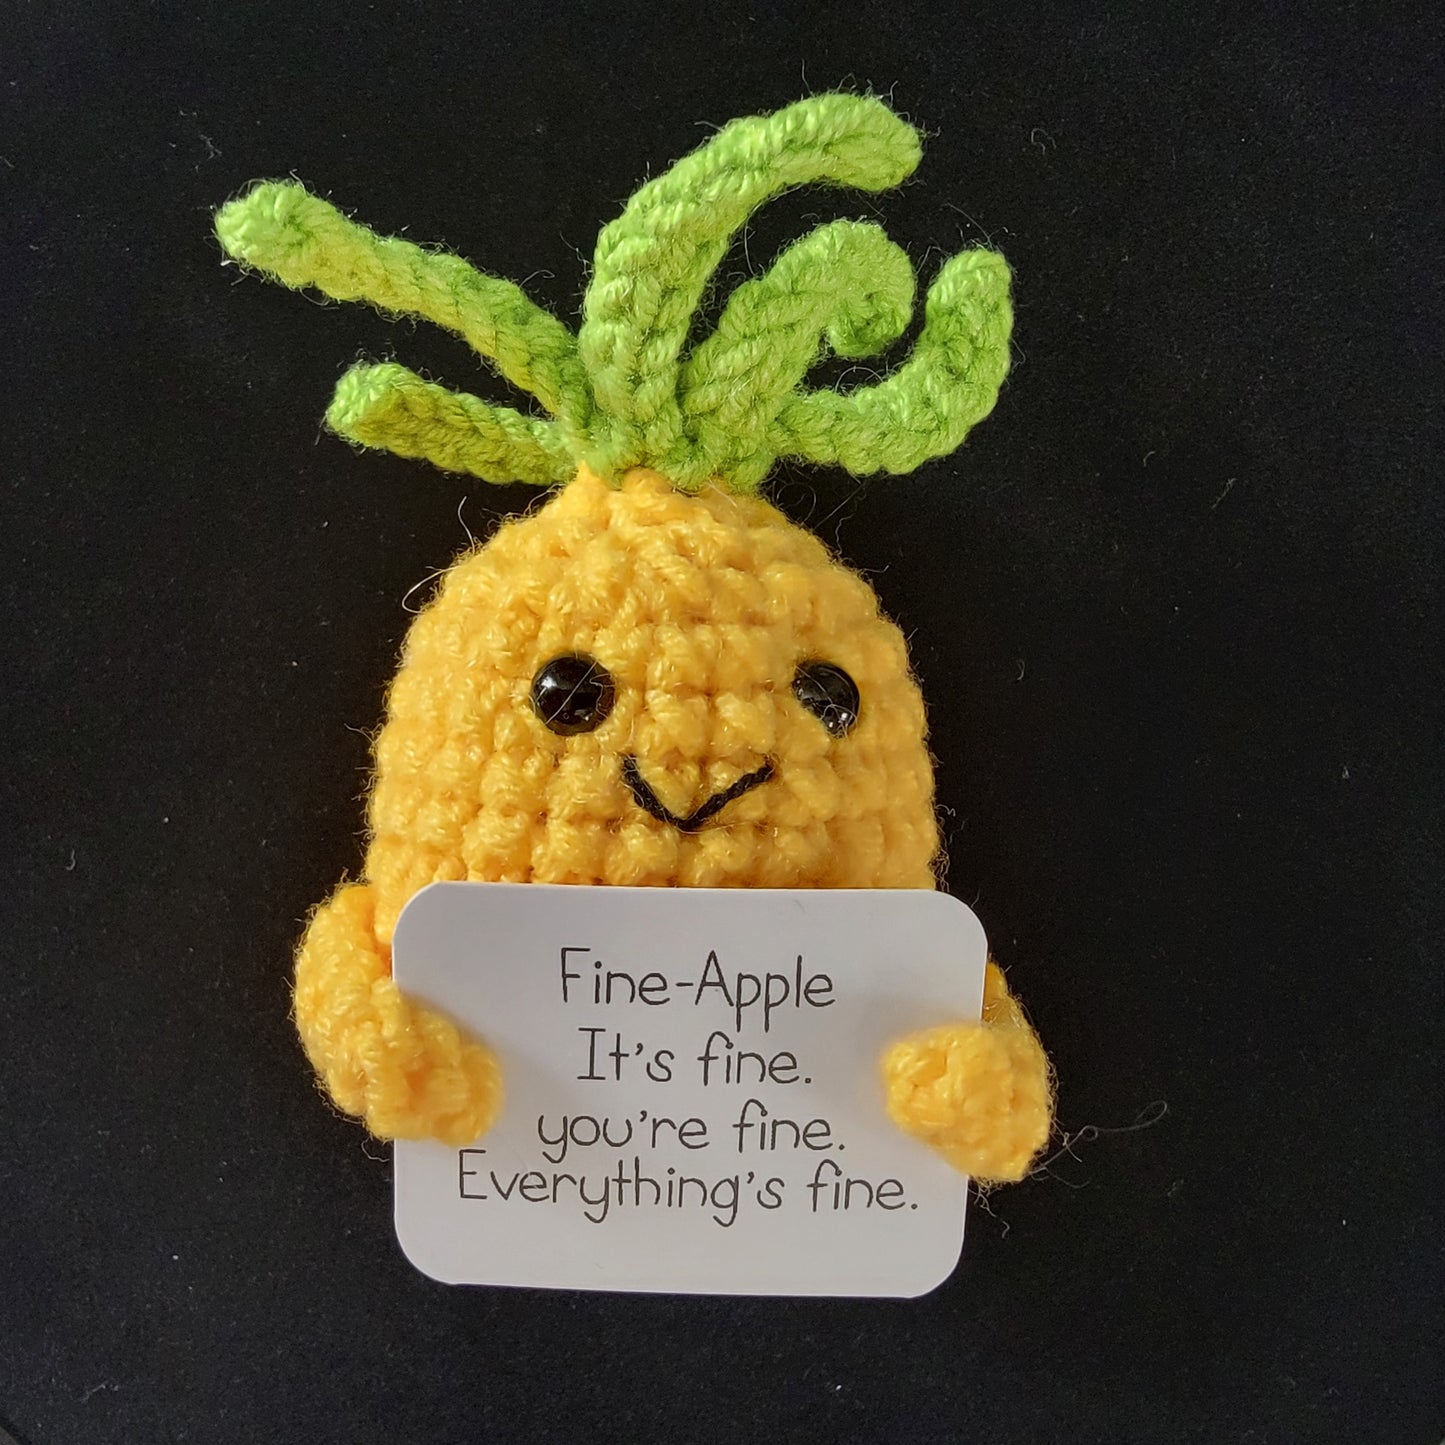 "Fine-Apple" Crocheted Character